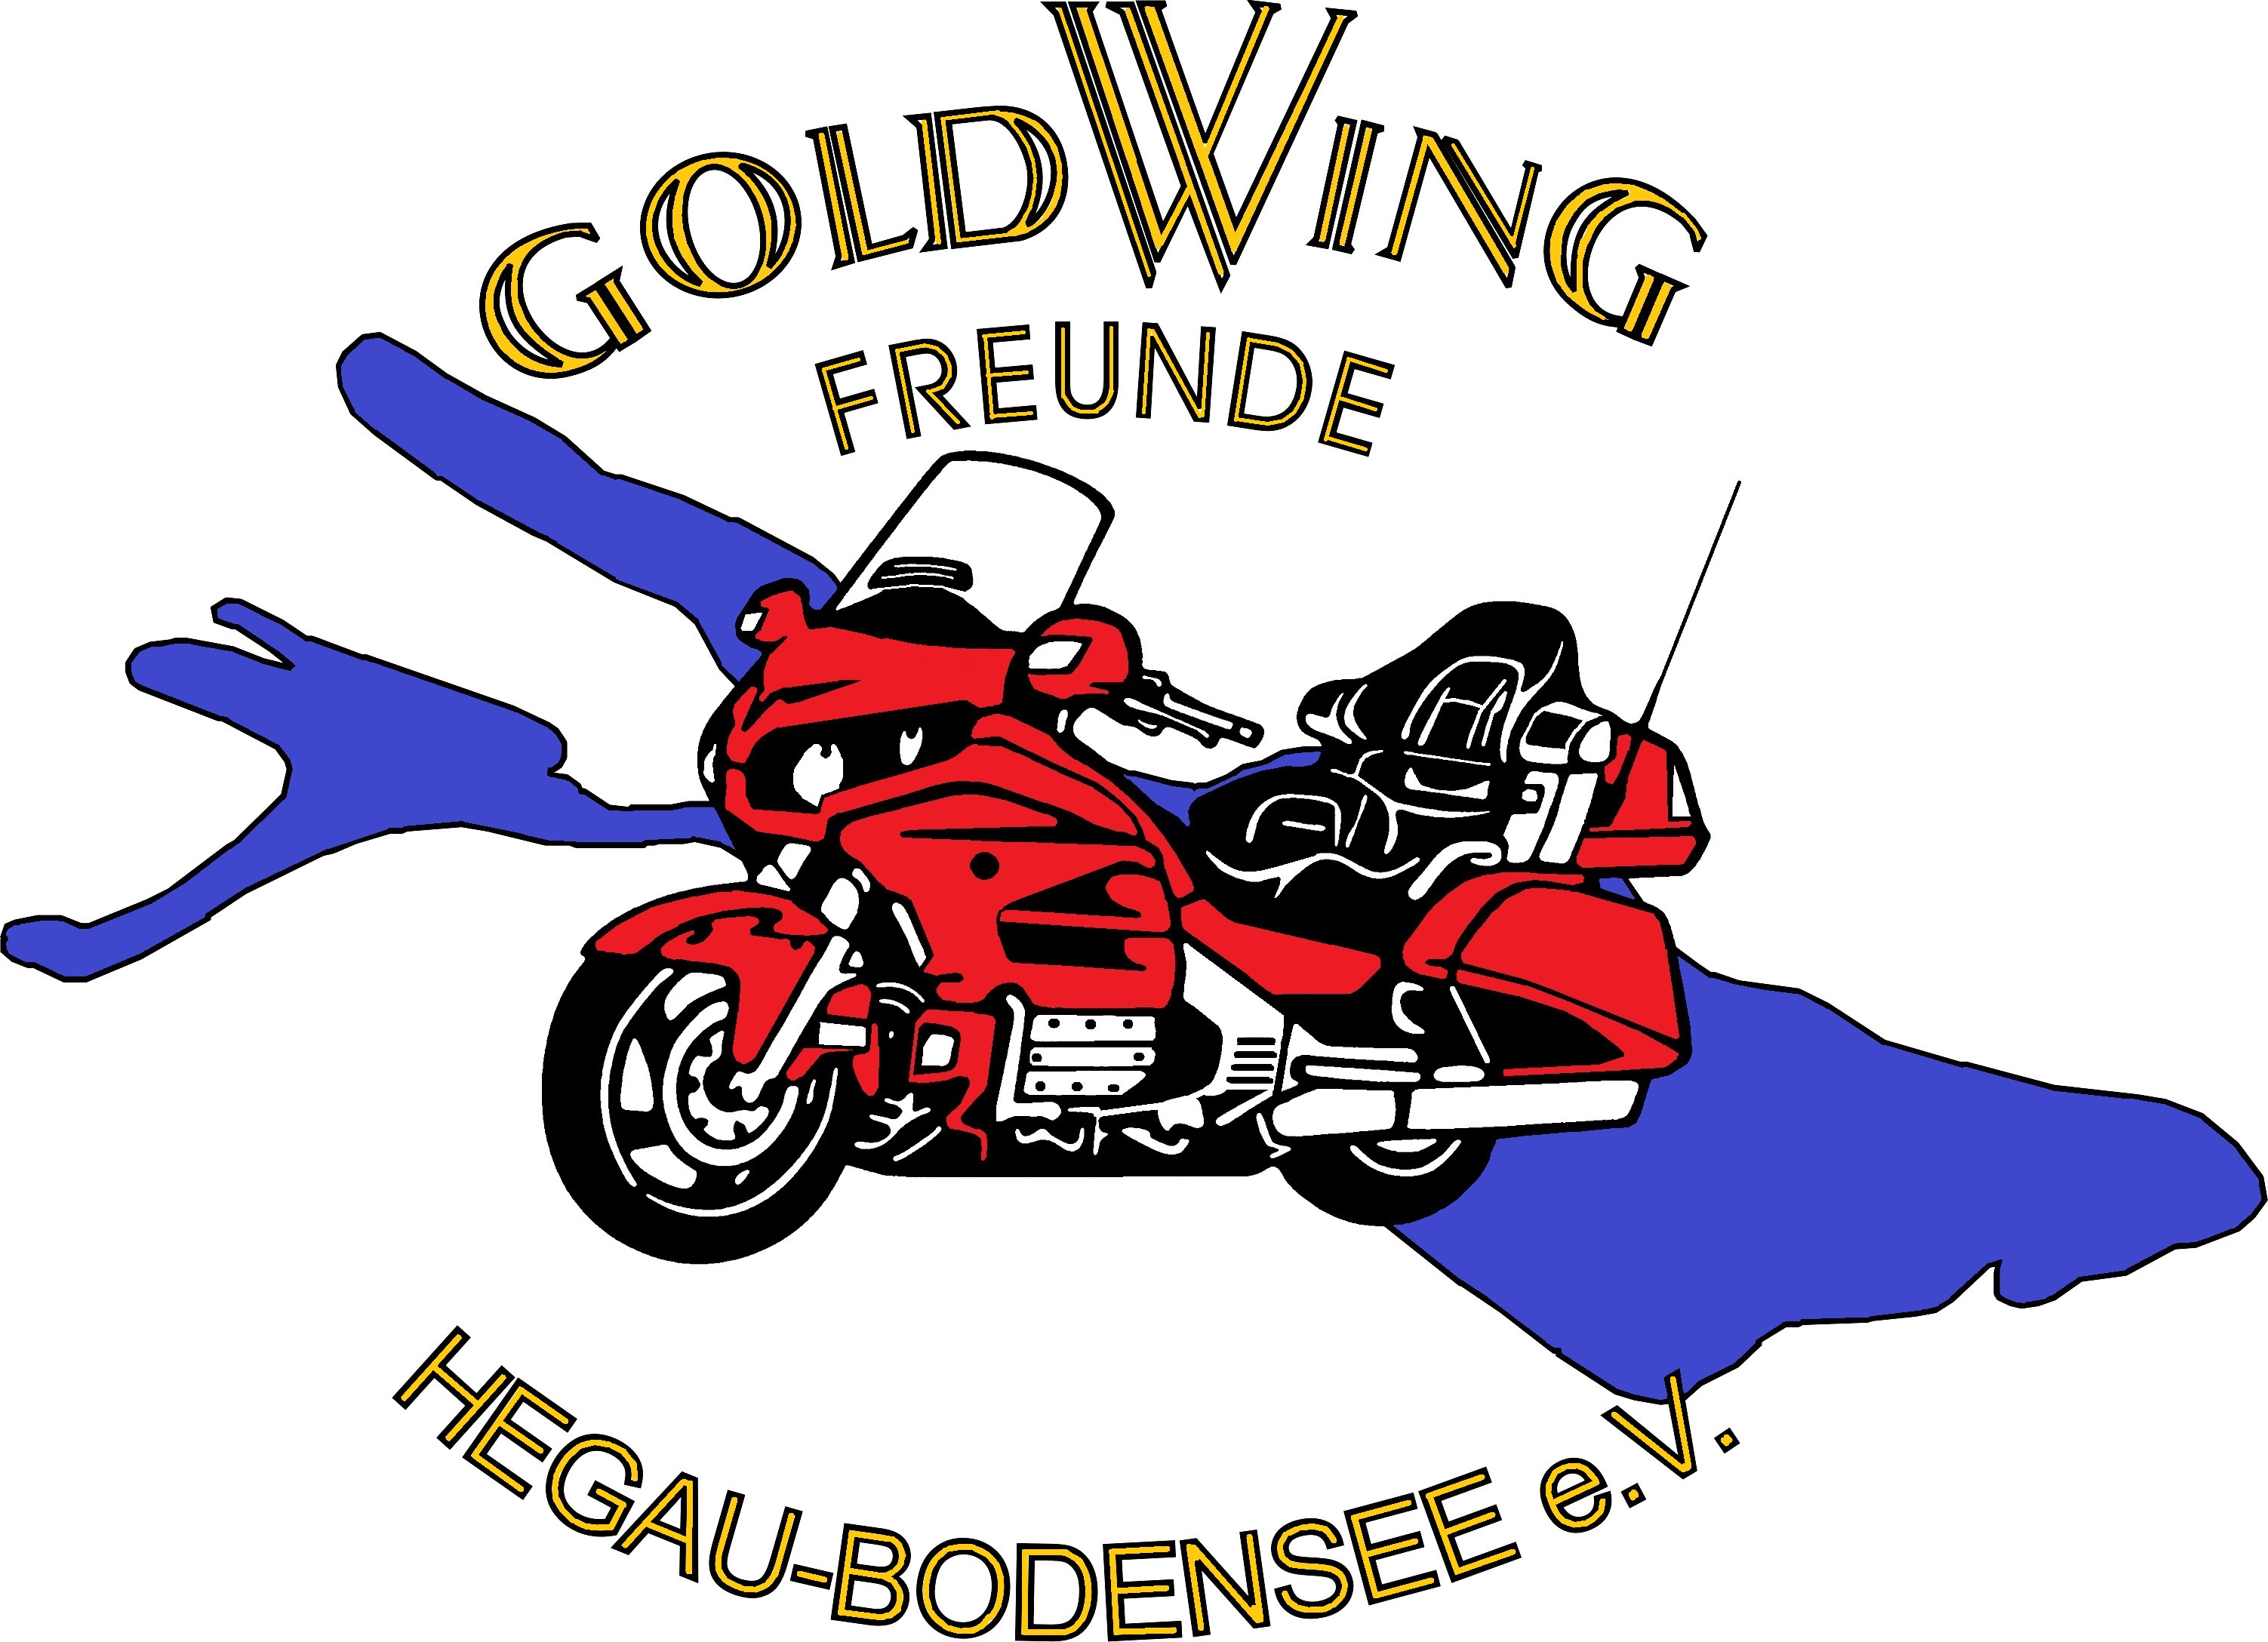 (c) Goldwing-freunde.de